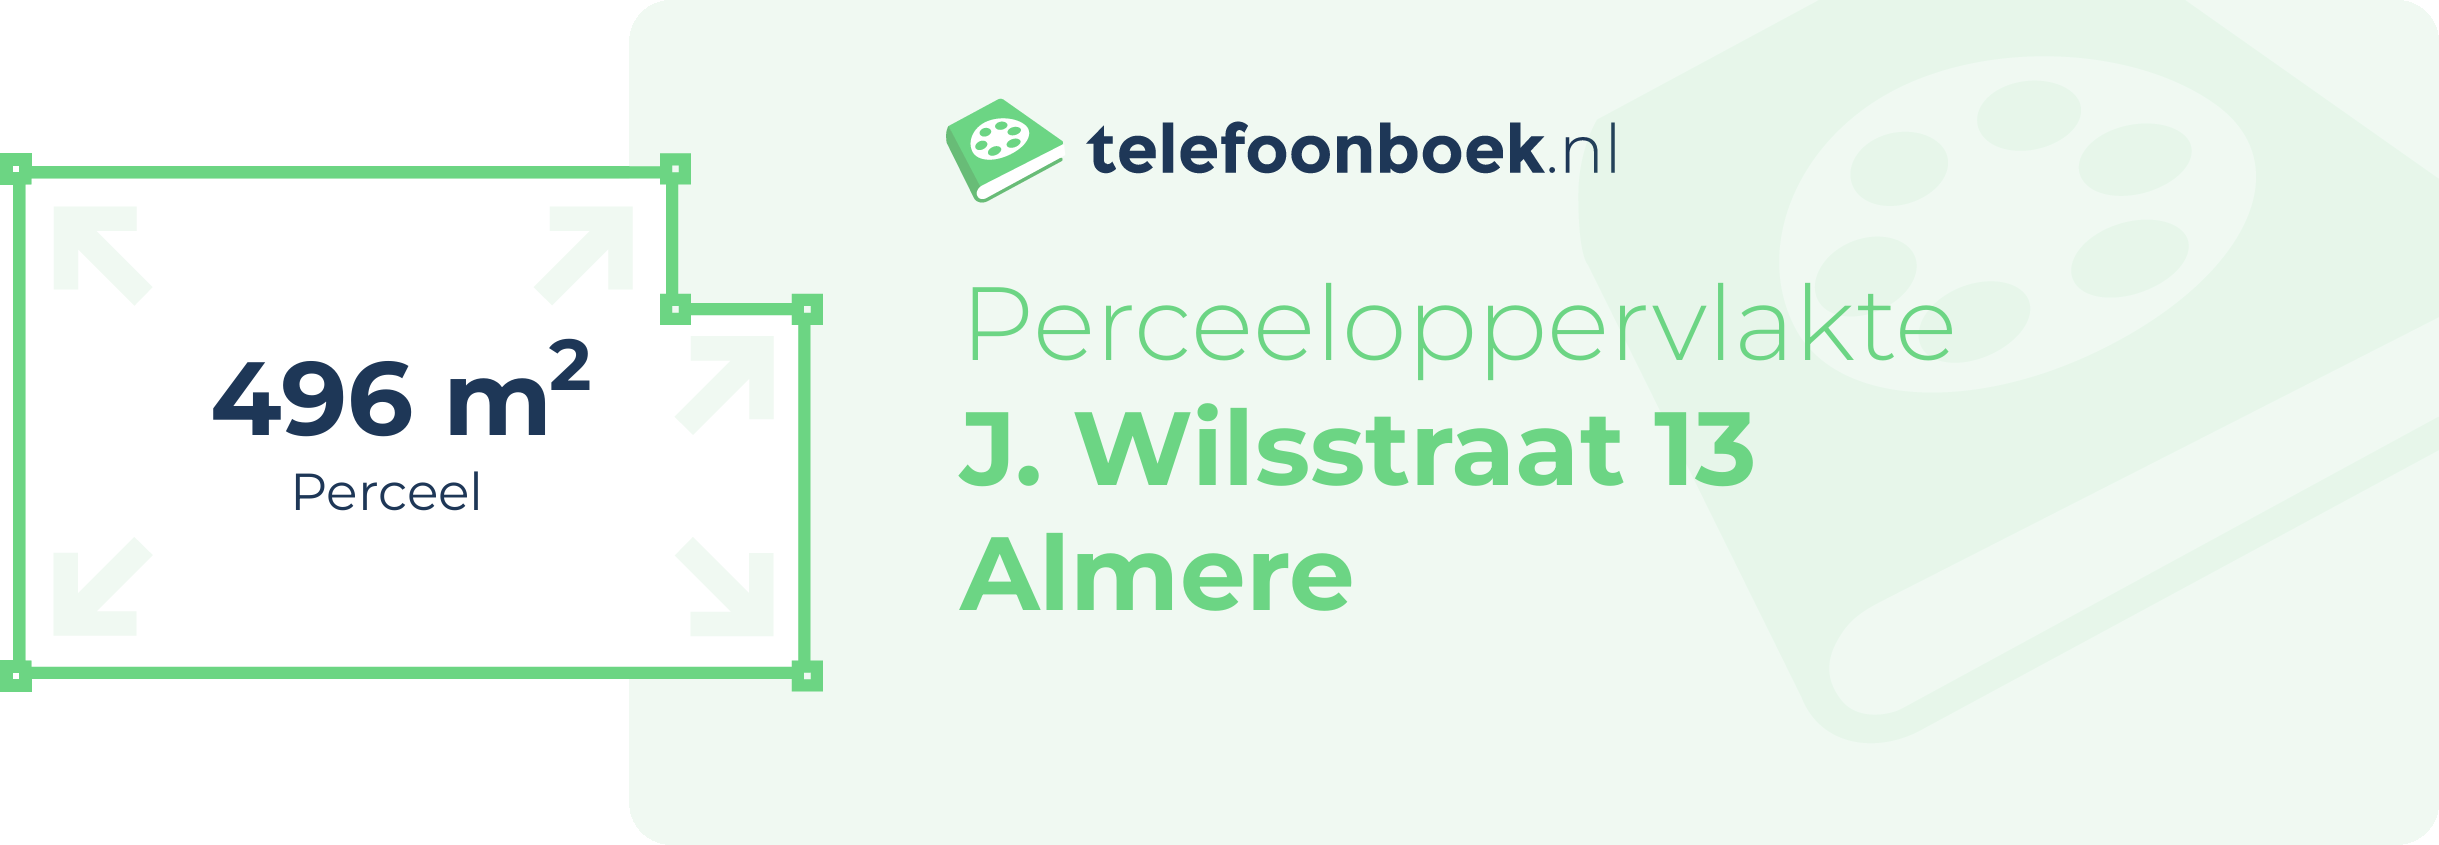 Perceeloppervlakte J. Wilsstraat 13 Almere